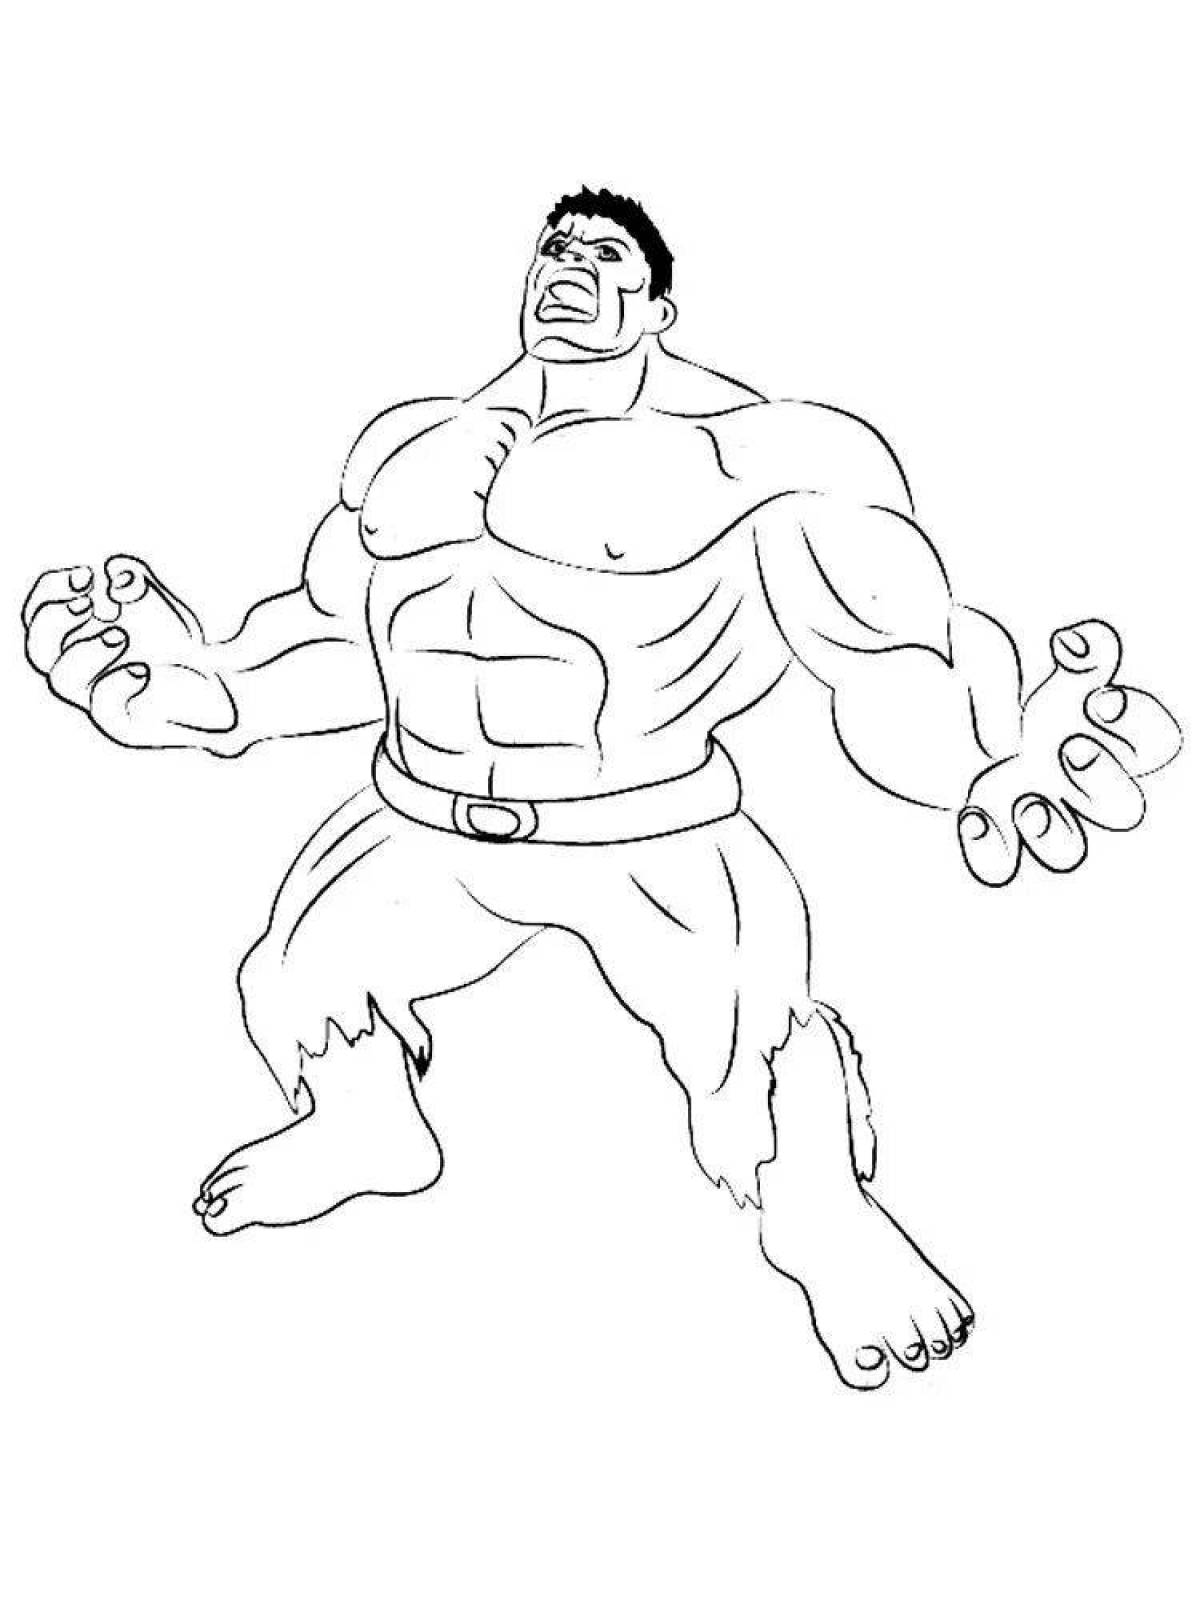 Hulk coloring for kids